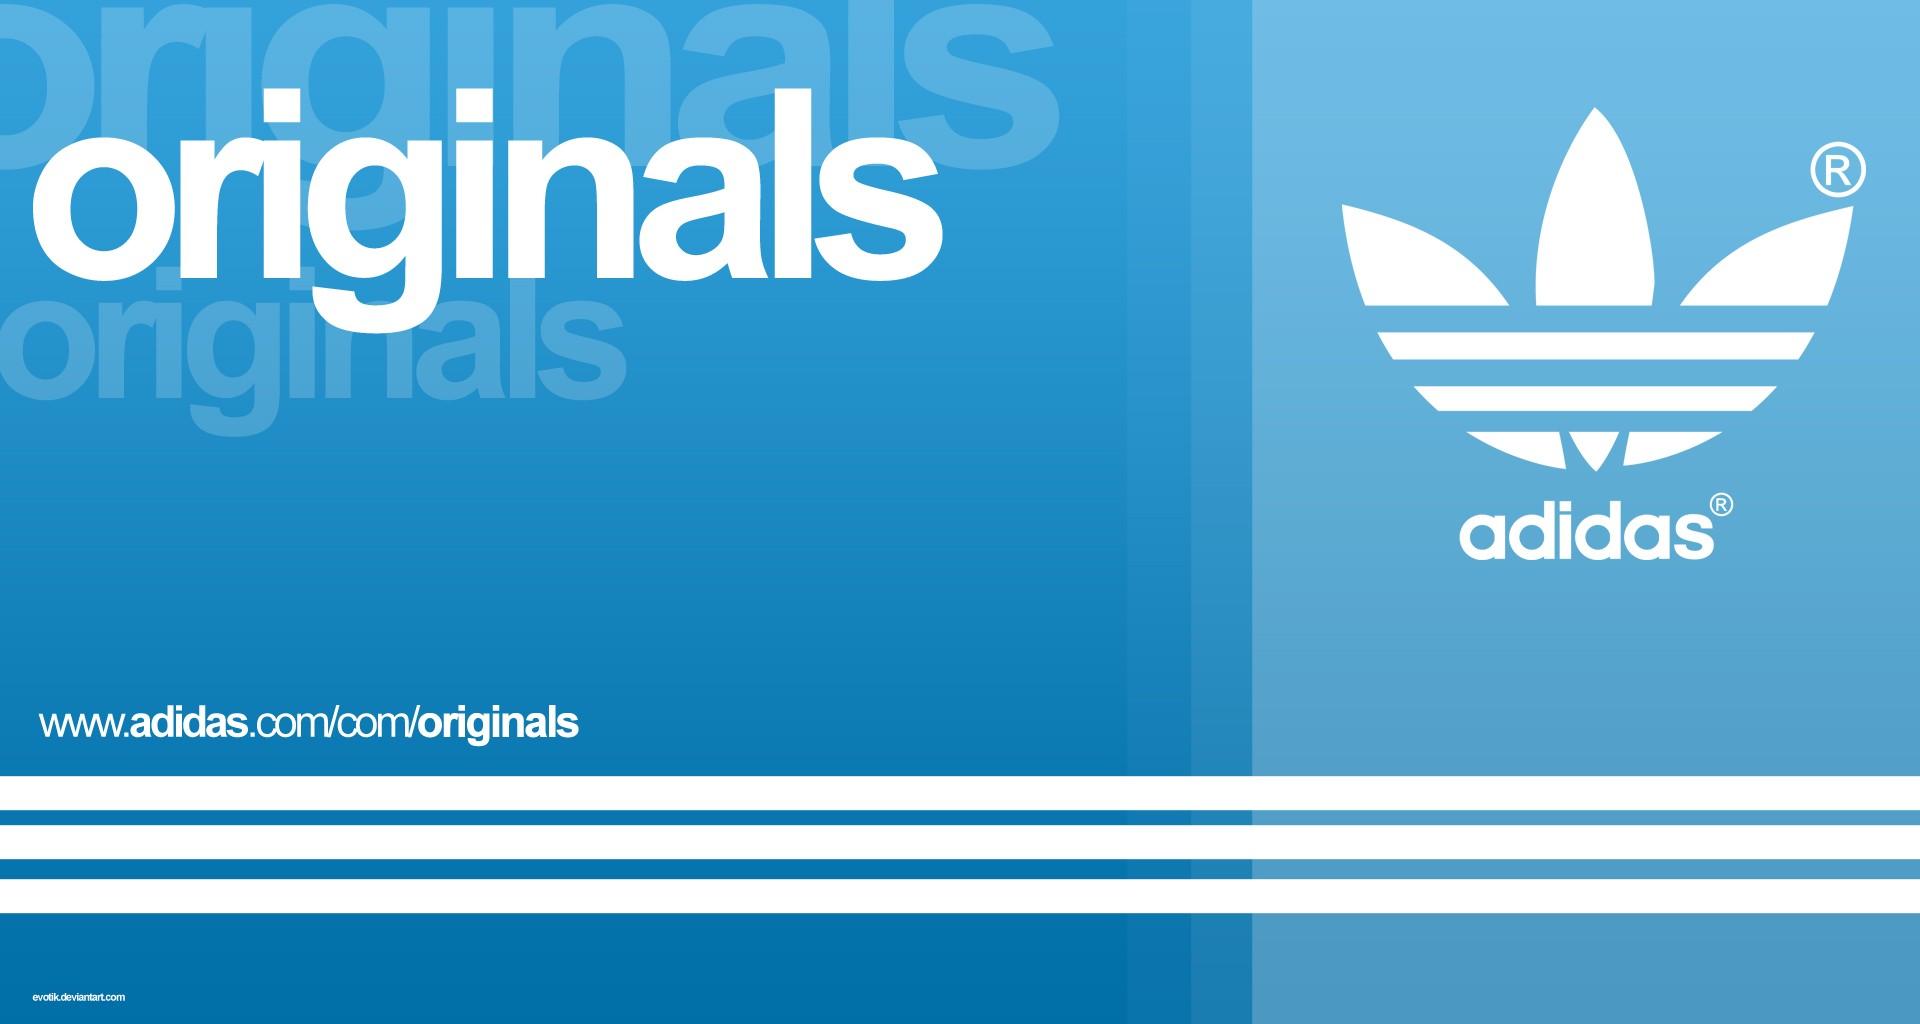 Download the Adidas Originals Wallpaper, Adidas Originals iPhone